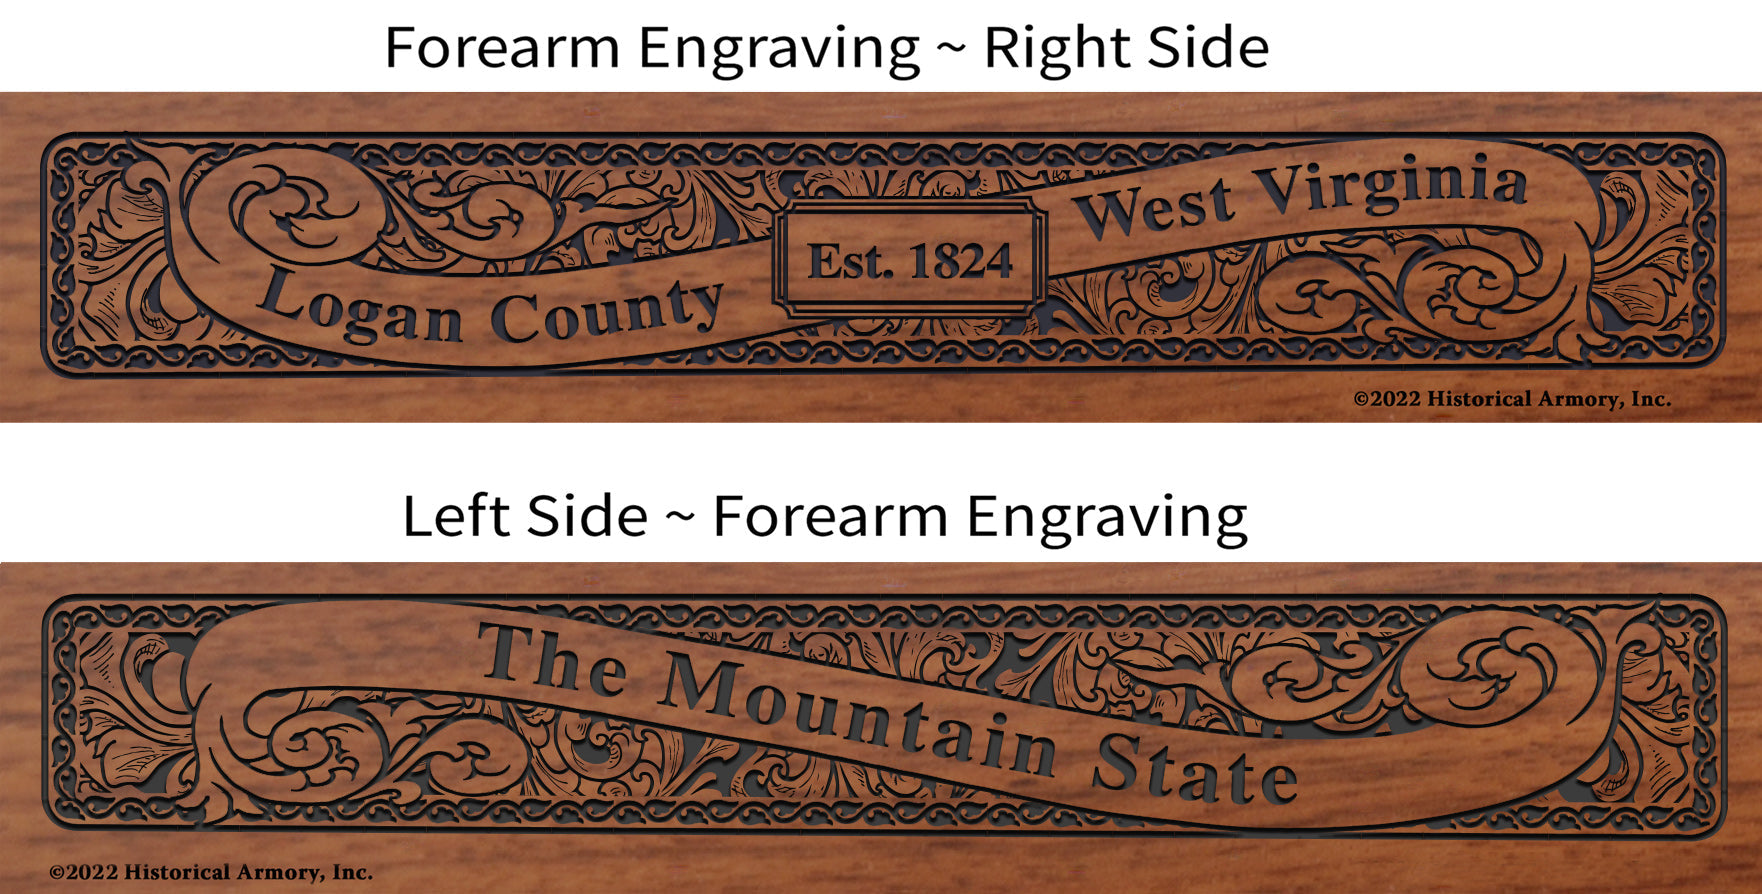 Logan County West Virginia Engraved Rifle Forearm